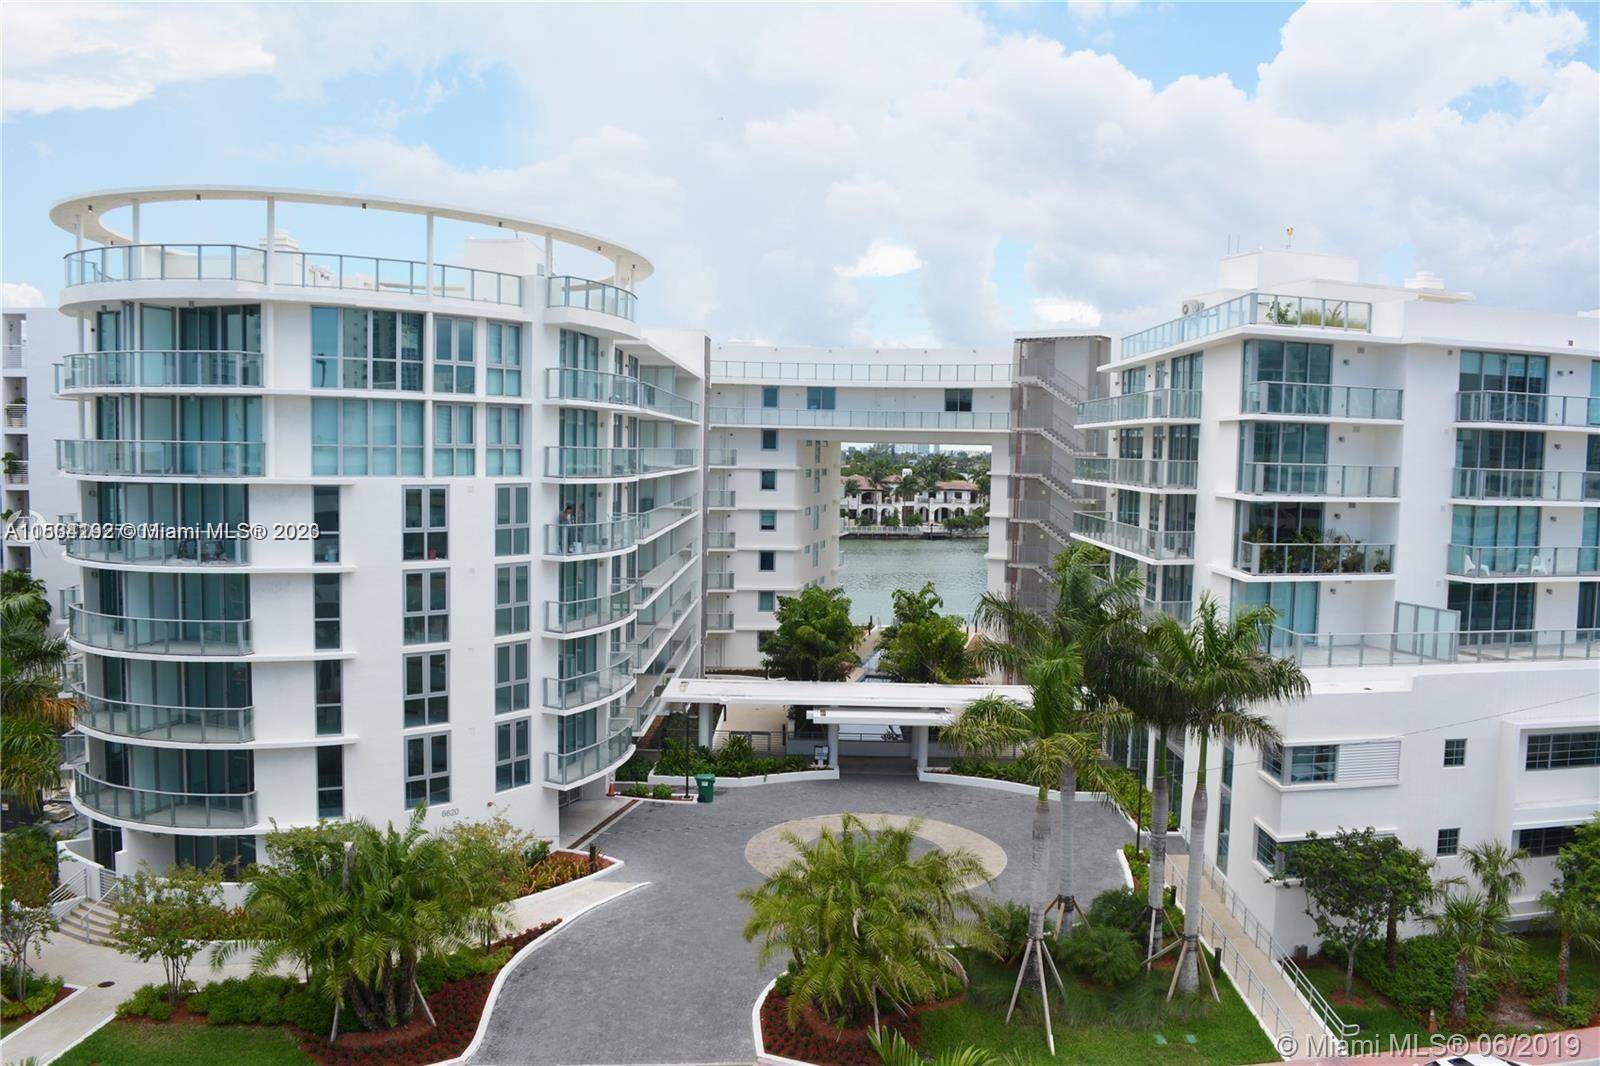 Beautiful Condo 1 1 half bath, Great Location in the heart of Miami Beach, Quiet boutique building Peloro Condominium.